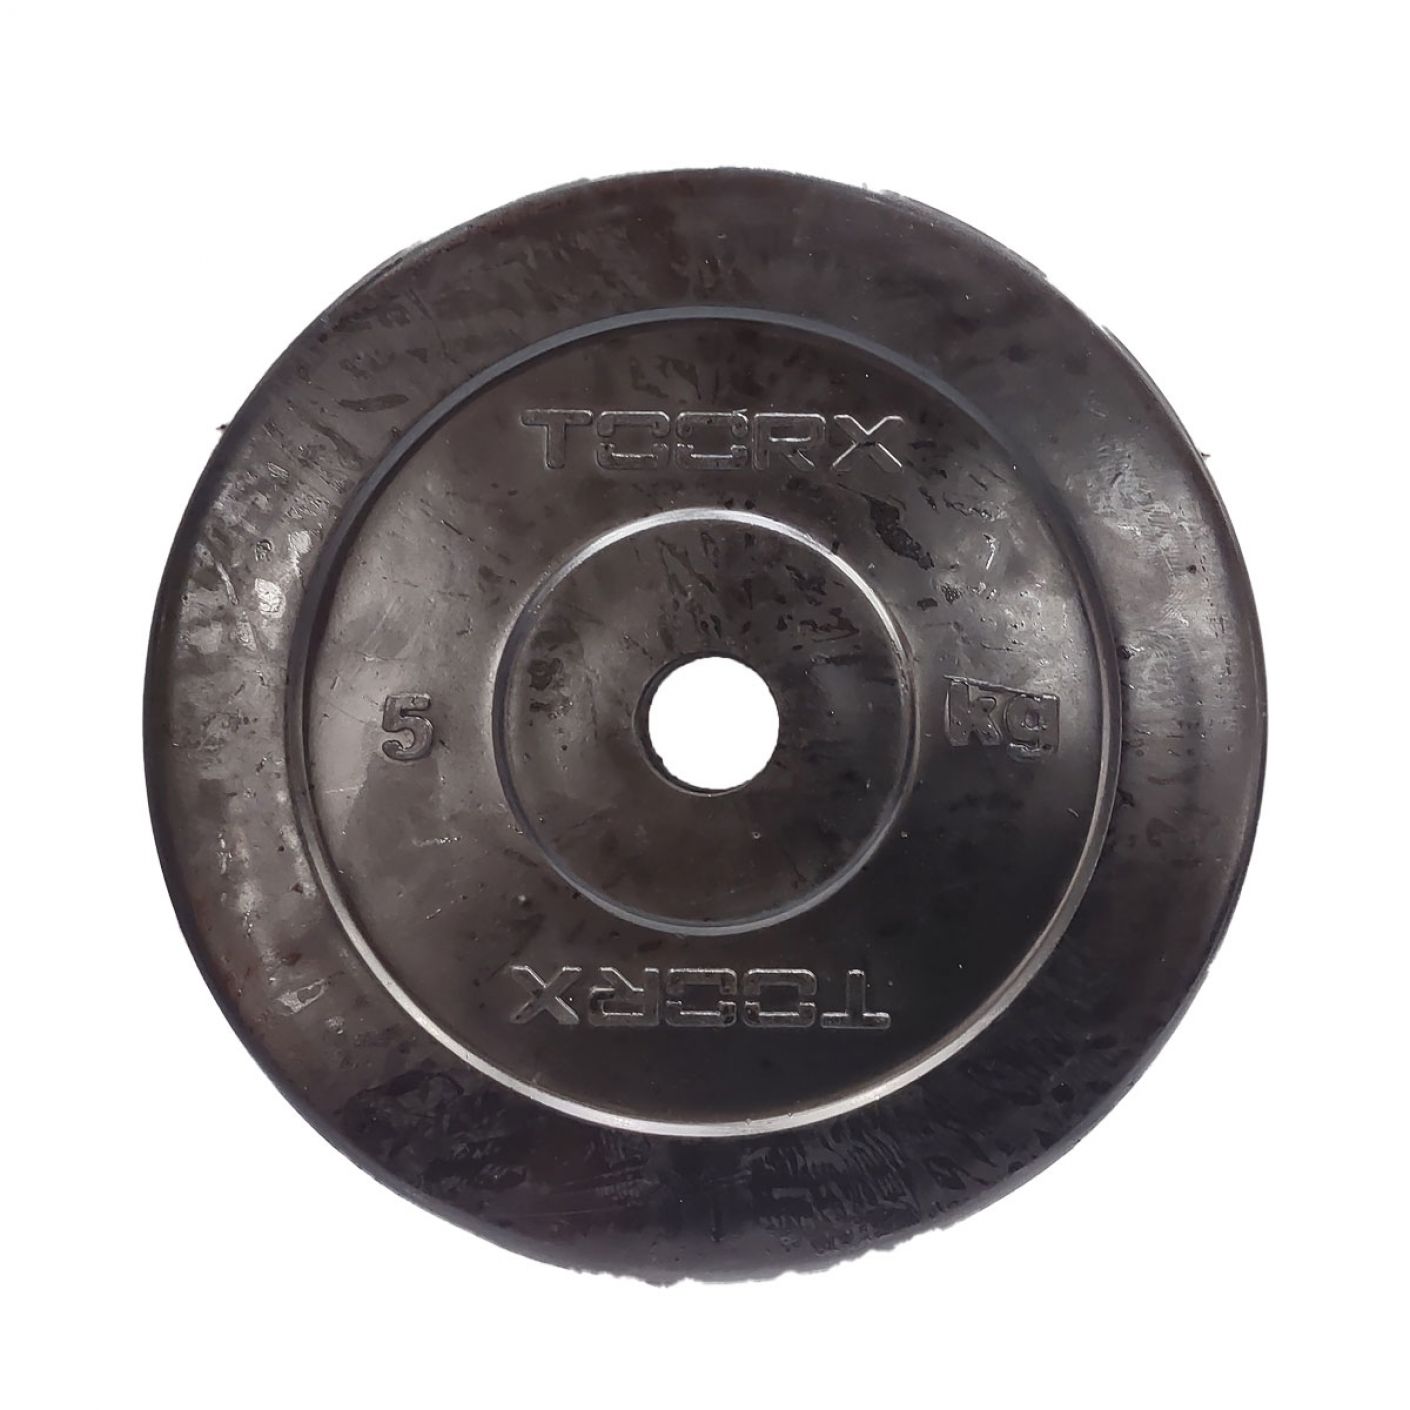 Toorx Rubberized Cast Iron Disc Kg 5